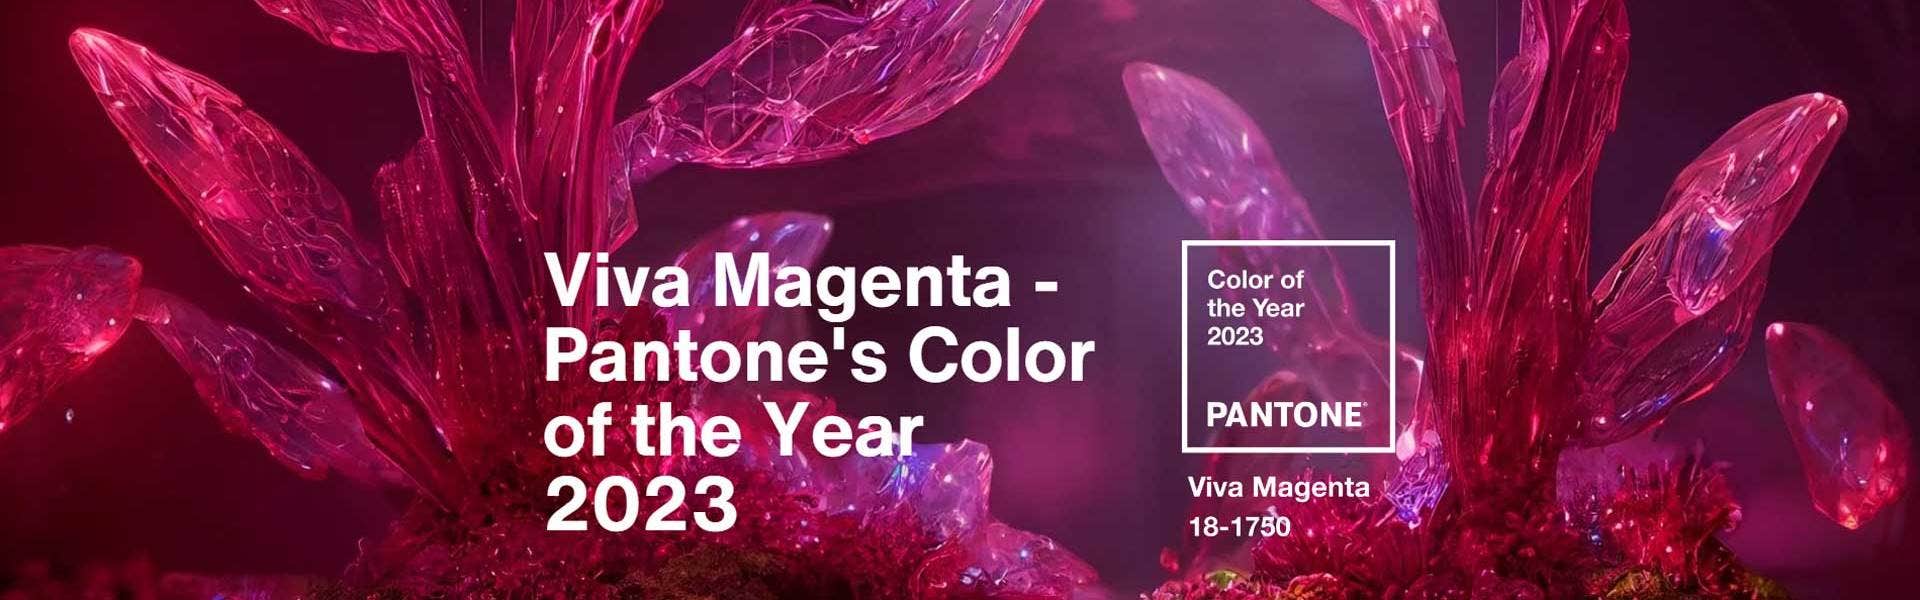 Pantone colour of the year 2023 Viva Magenta